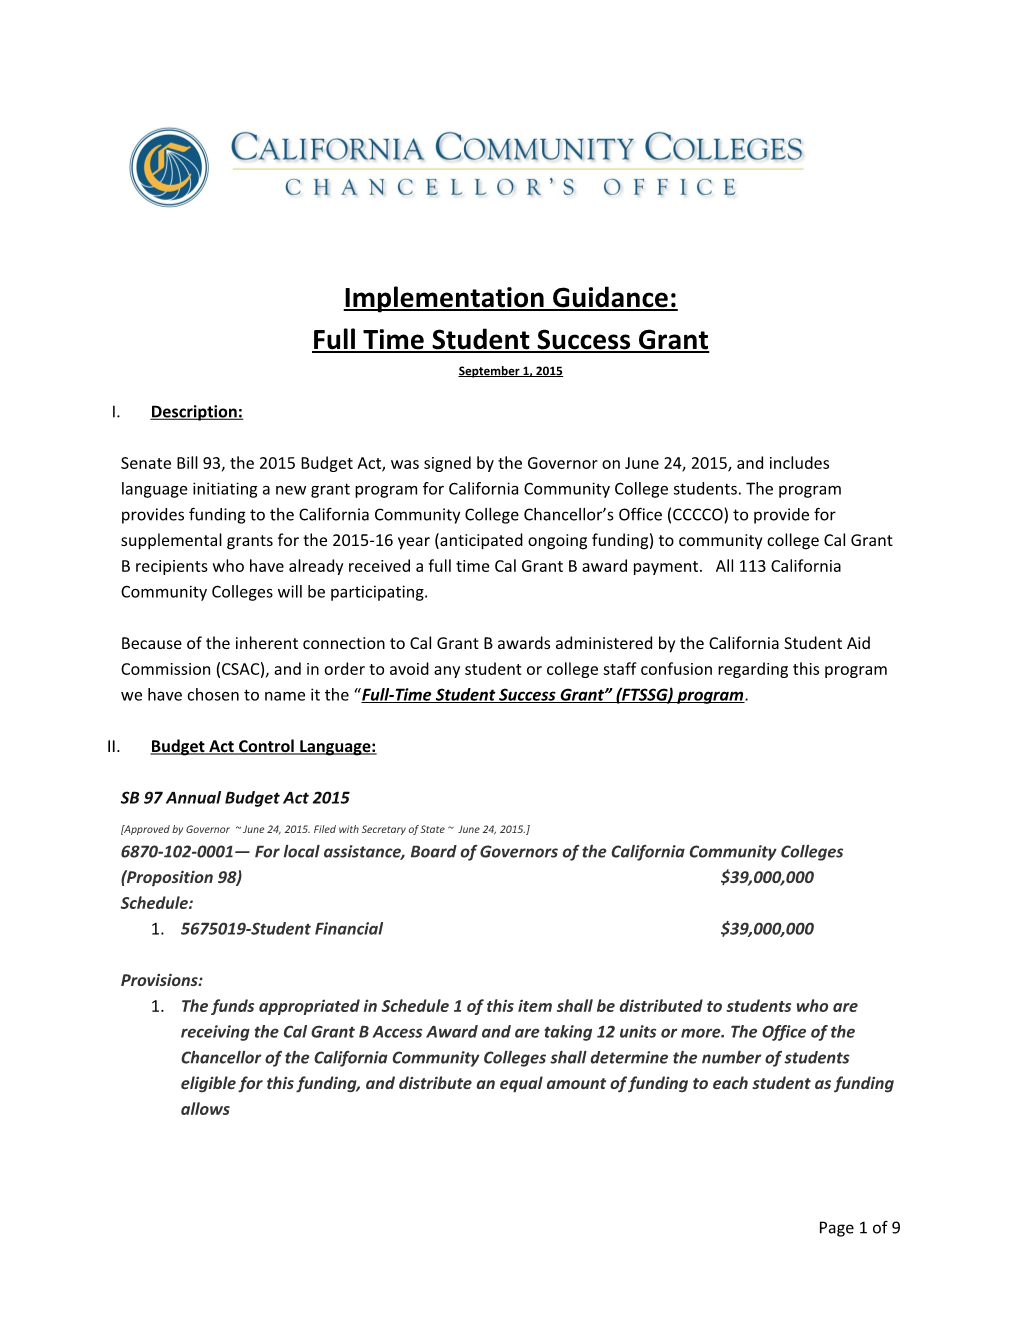 Full Time Student Success Grant